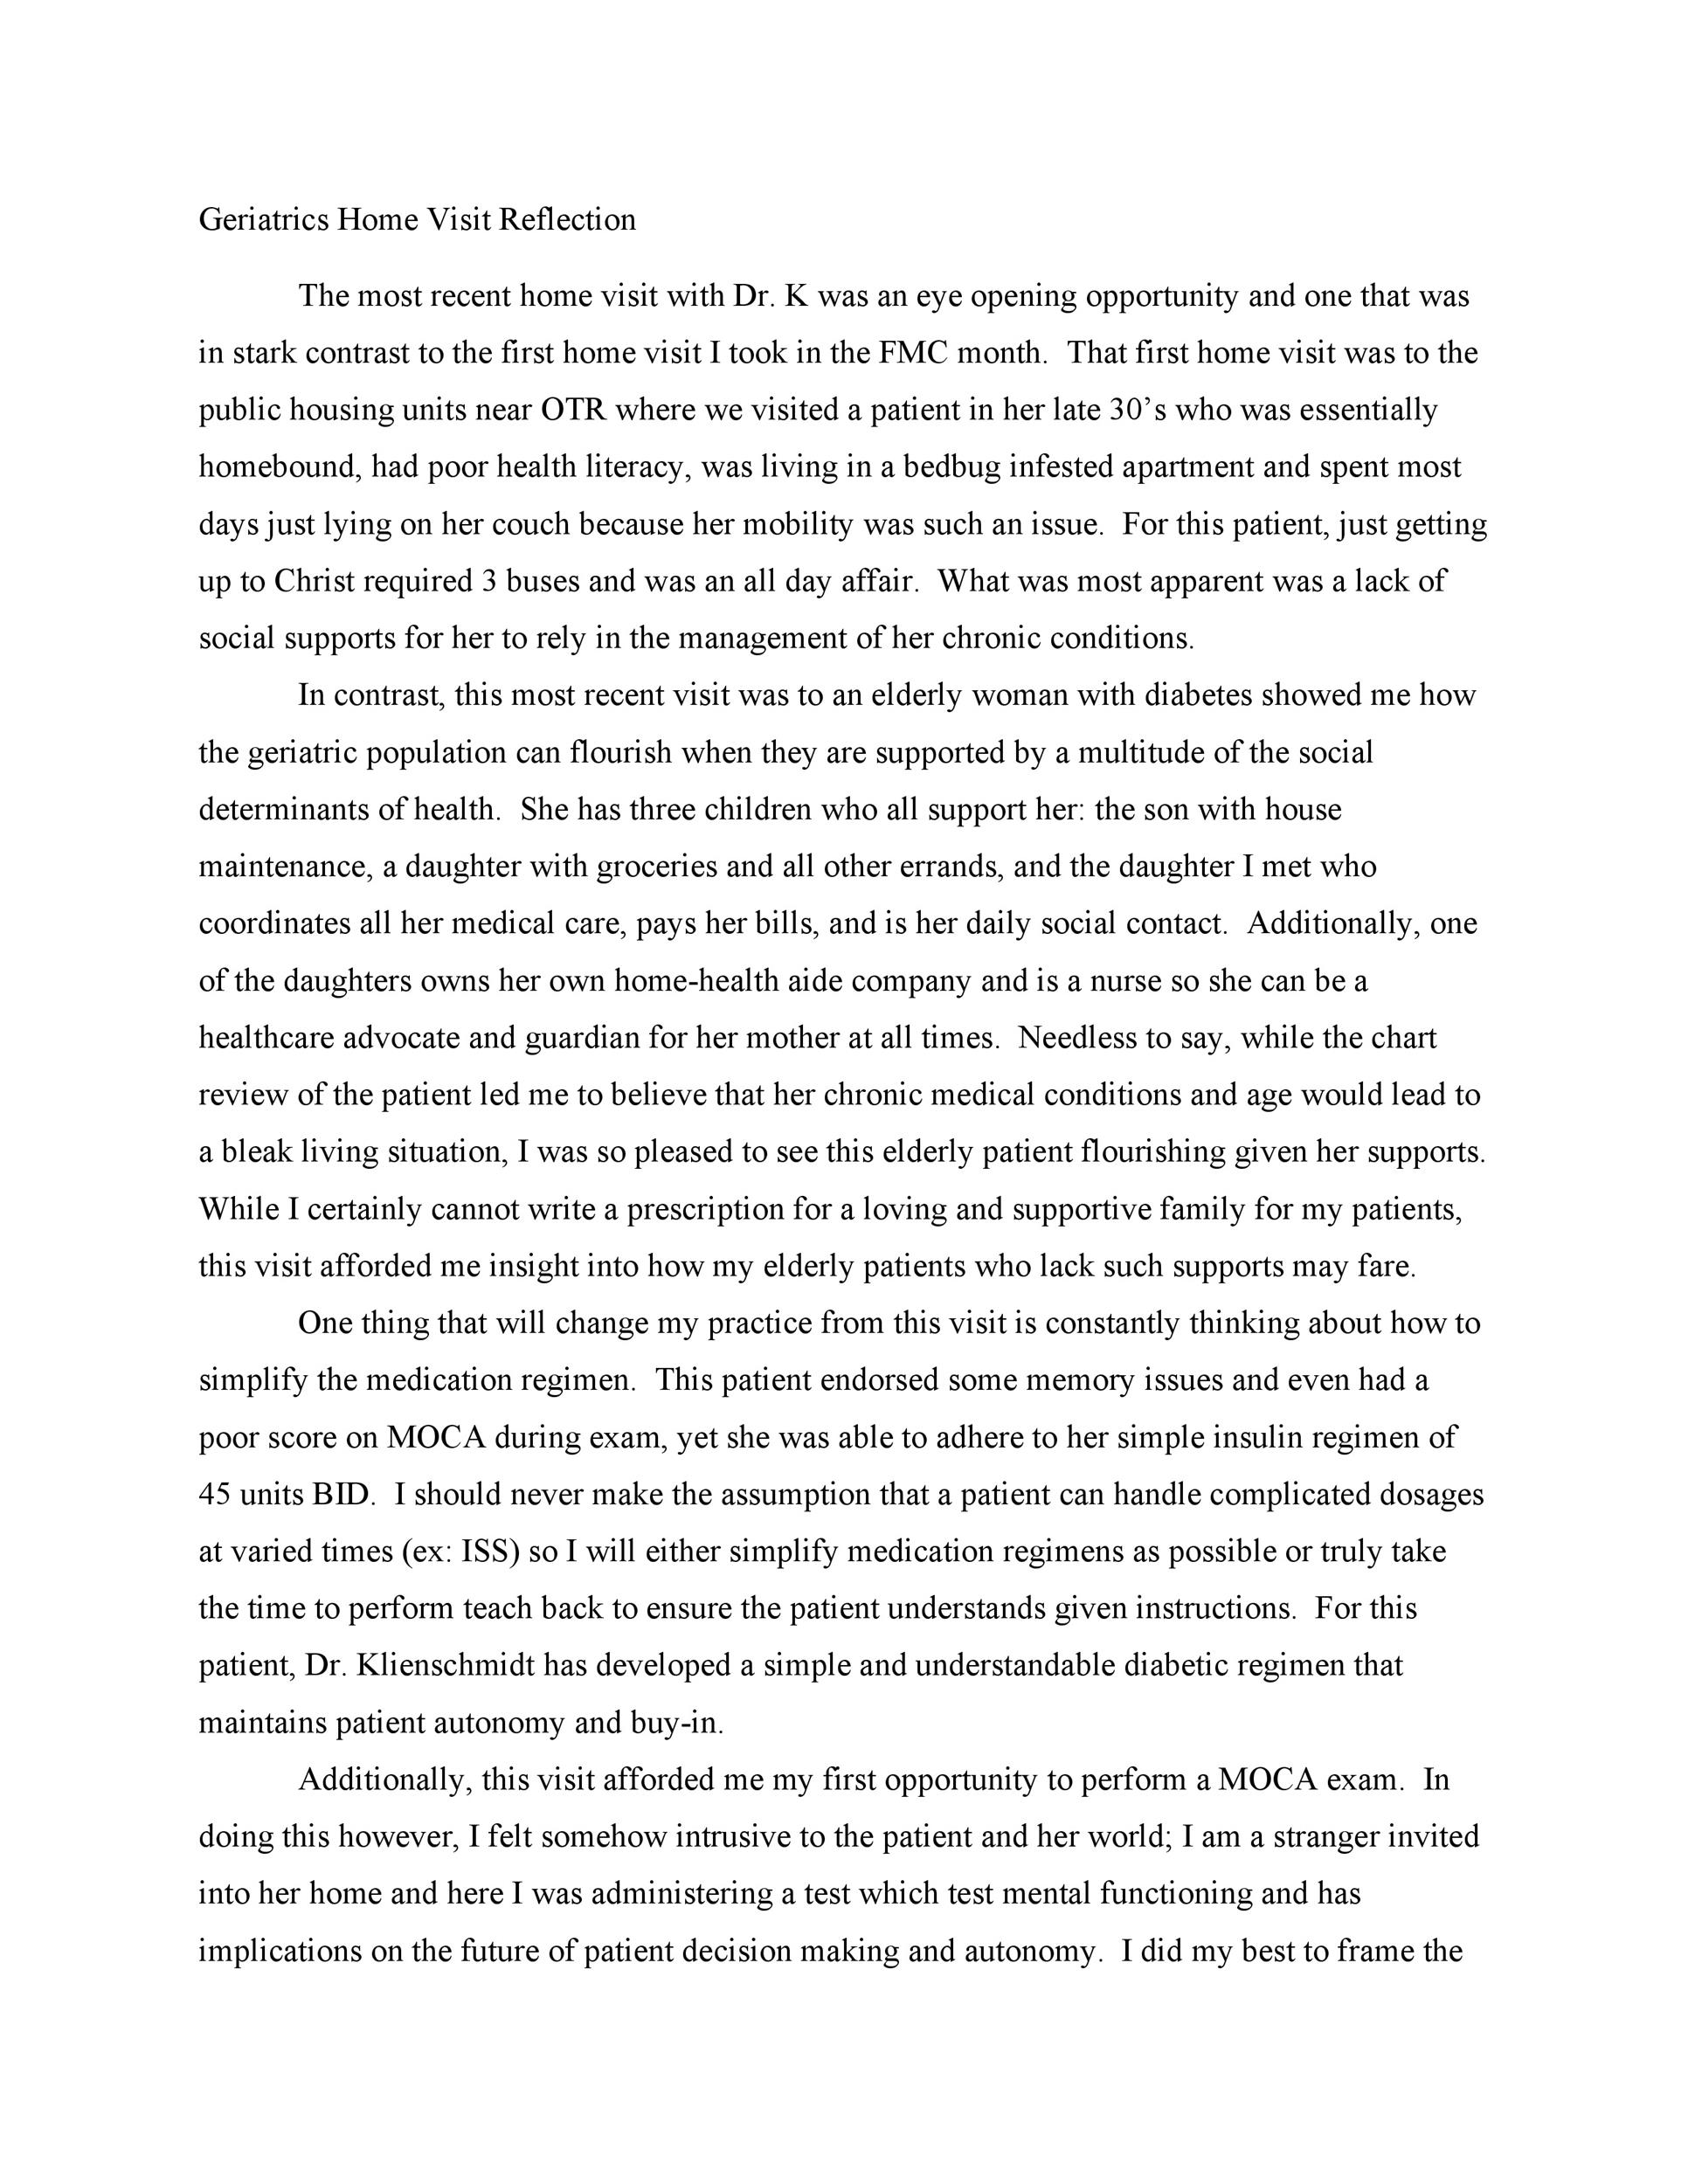 Free reflective essay example 39